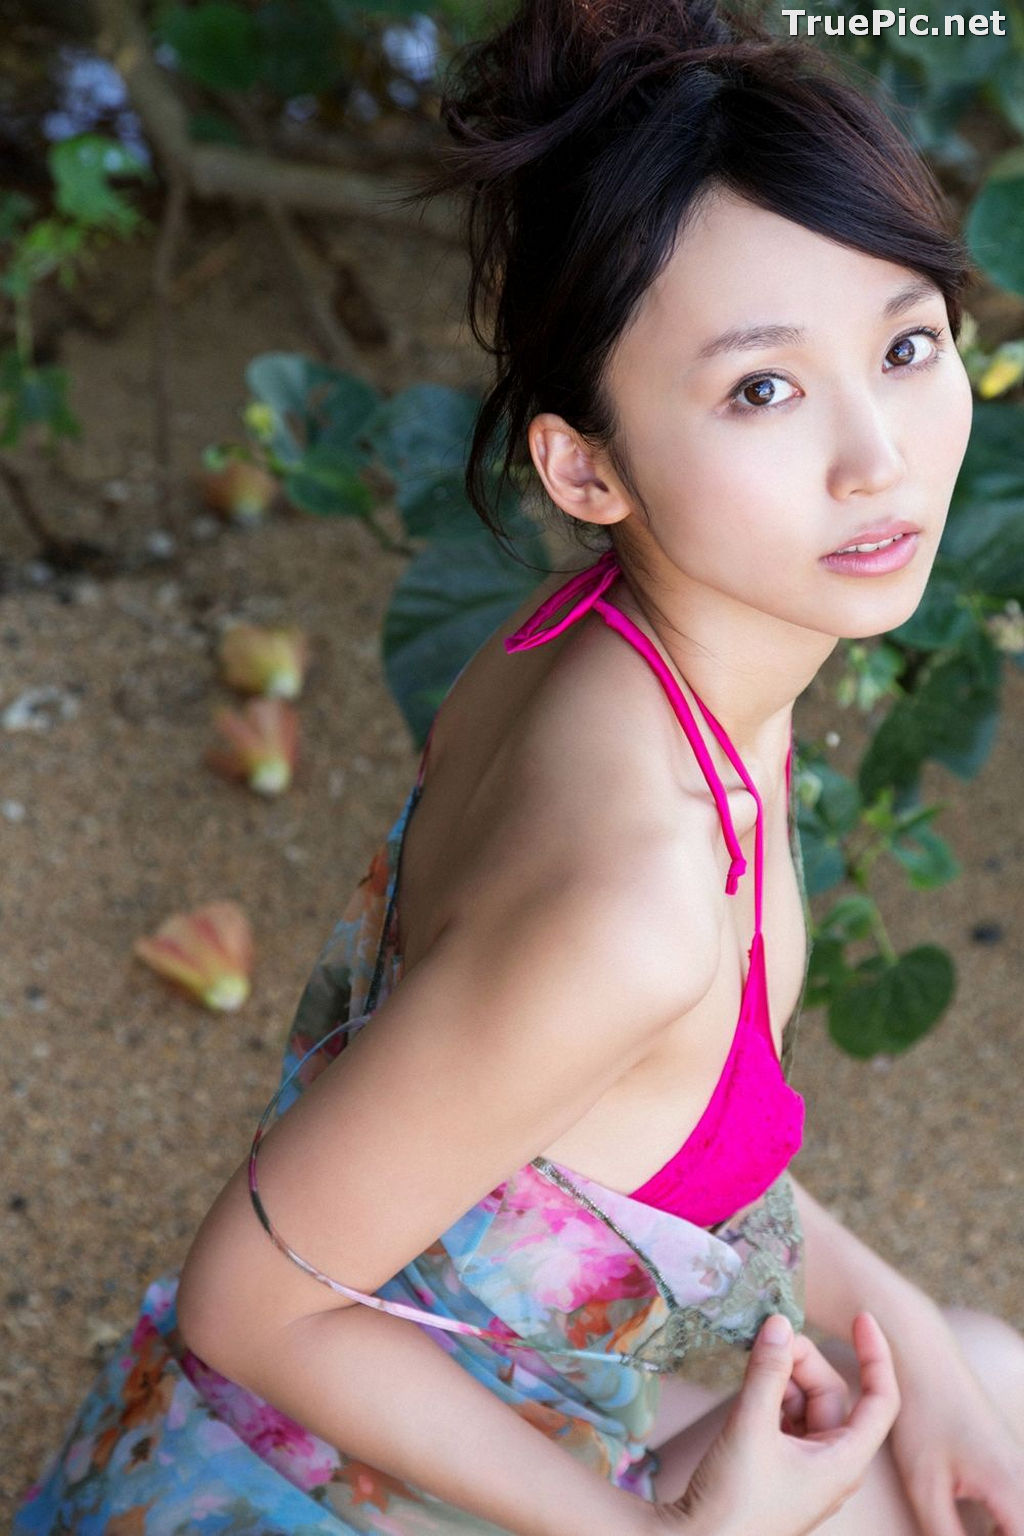 Image [YS Web] Vol.527 - Japanese Gravure Idol and Singer - Risa Yoshiki - TruePic.net - Picture-66